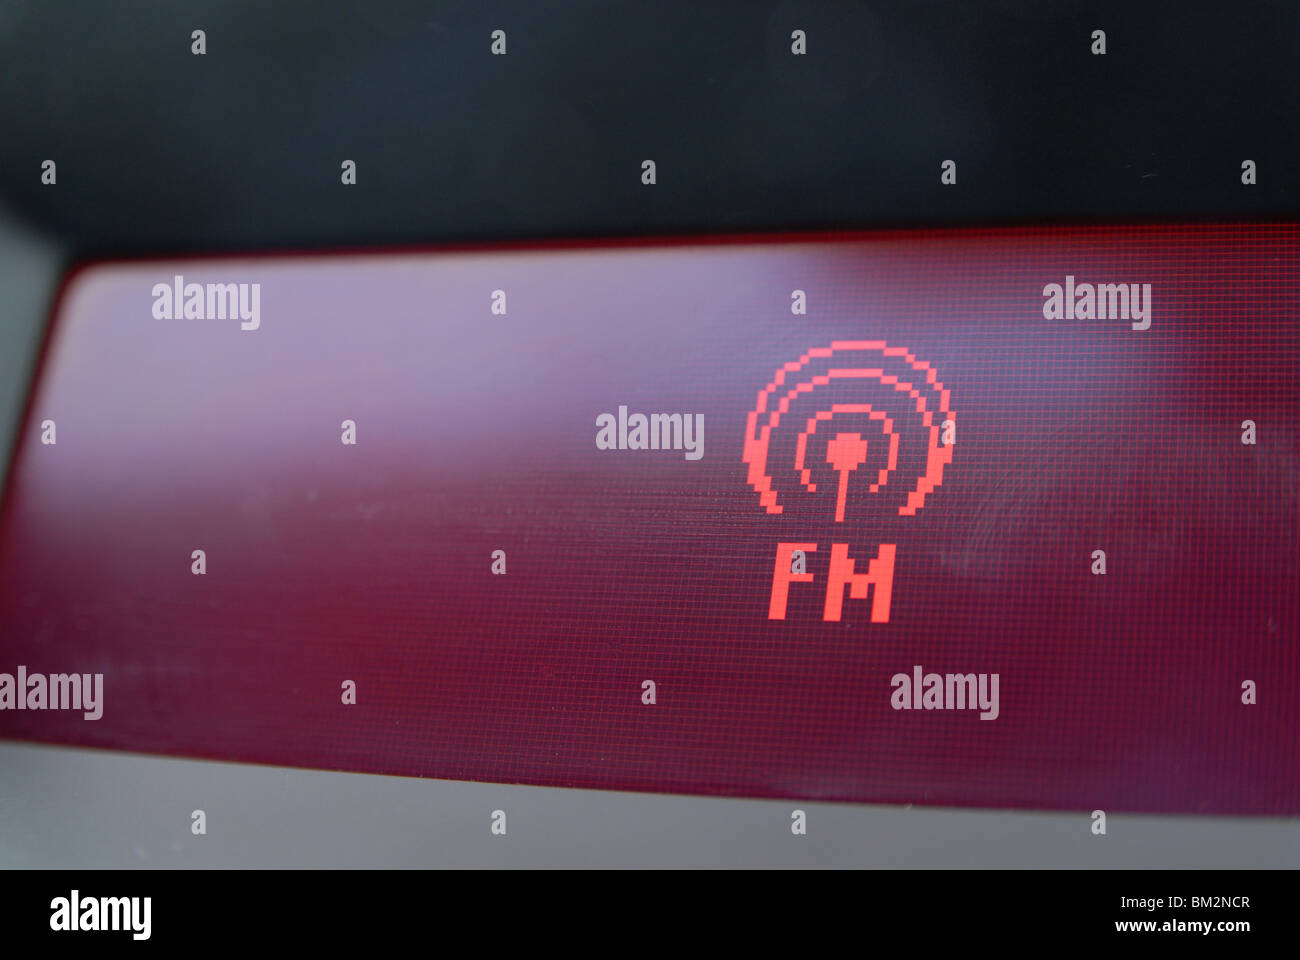 FM Radio frequency indicator on a car radio display Stock Photo - Alamy